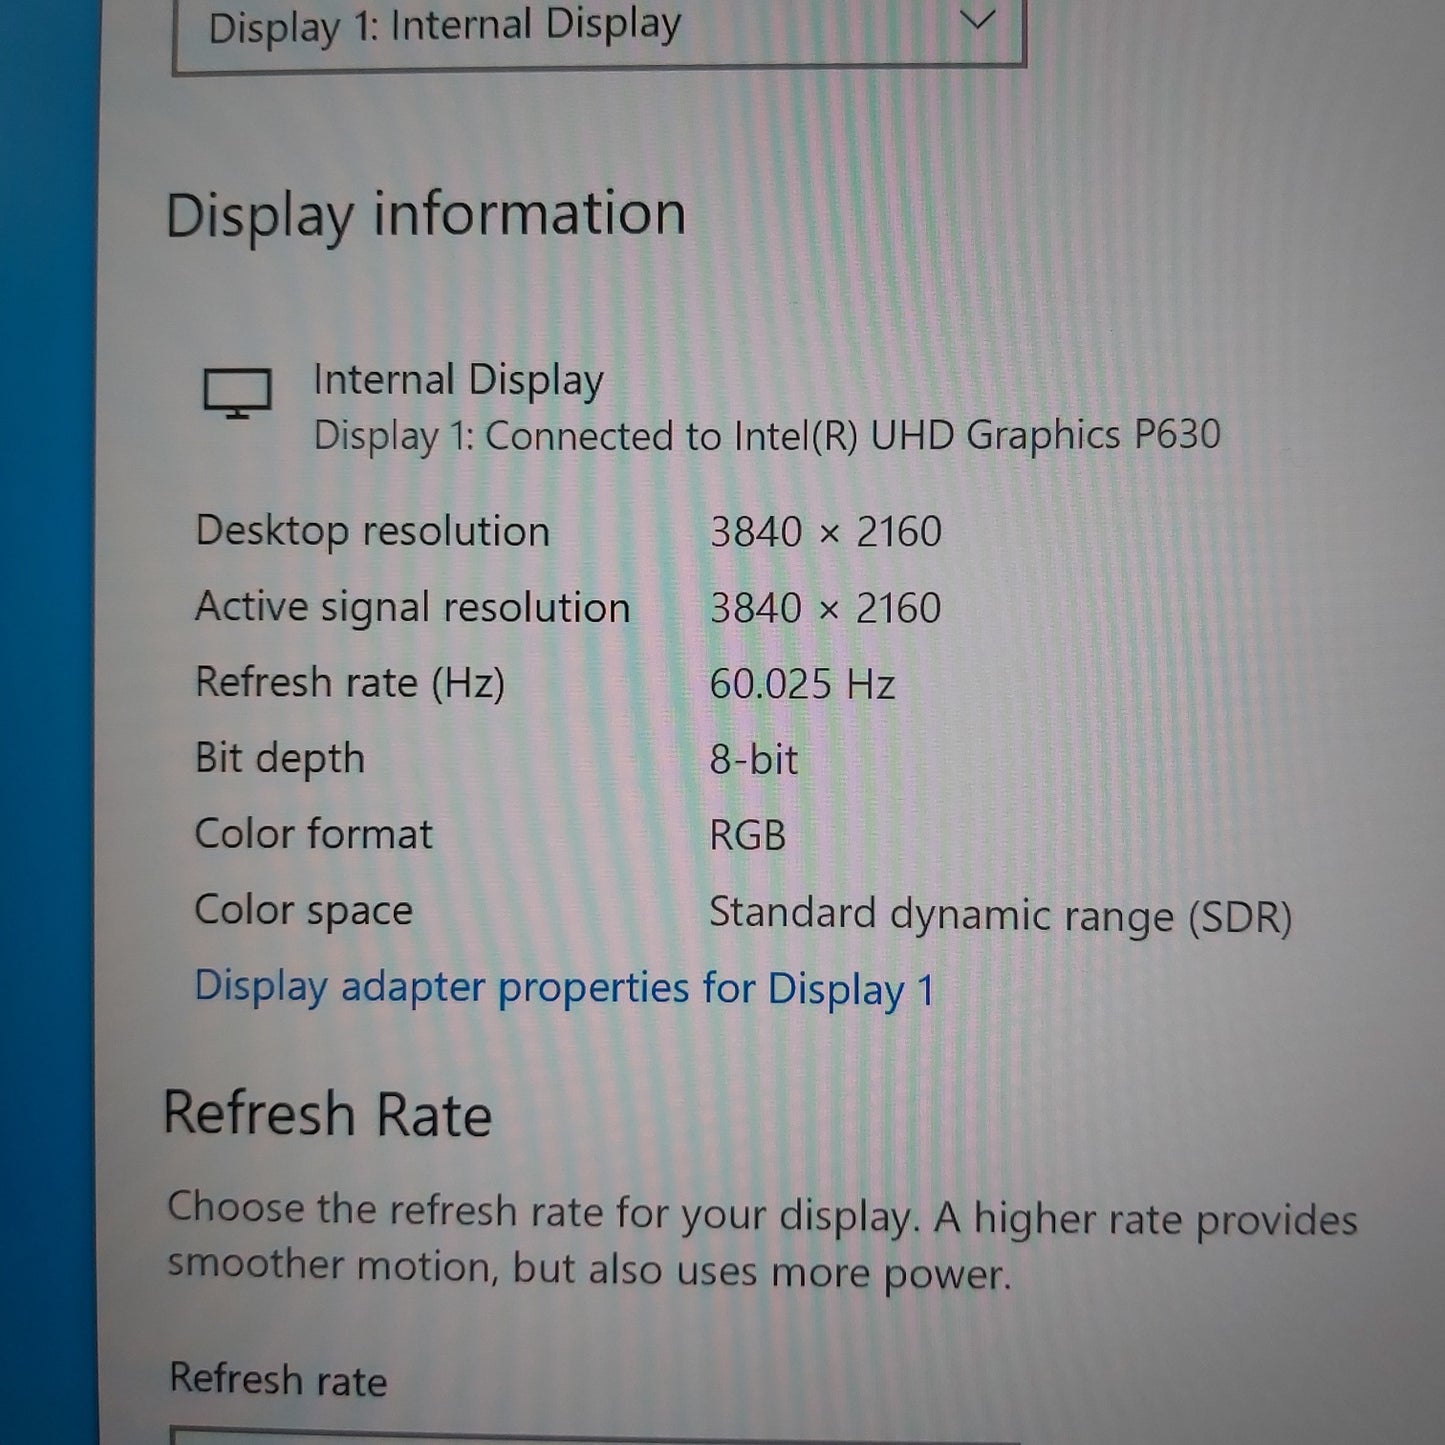 Dell Precision 7730 Xeon Mobile Workstation Laptop (New Open Box)